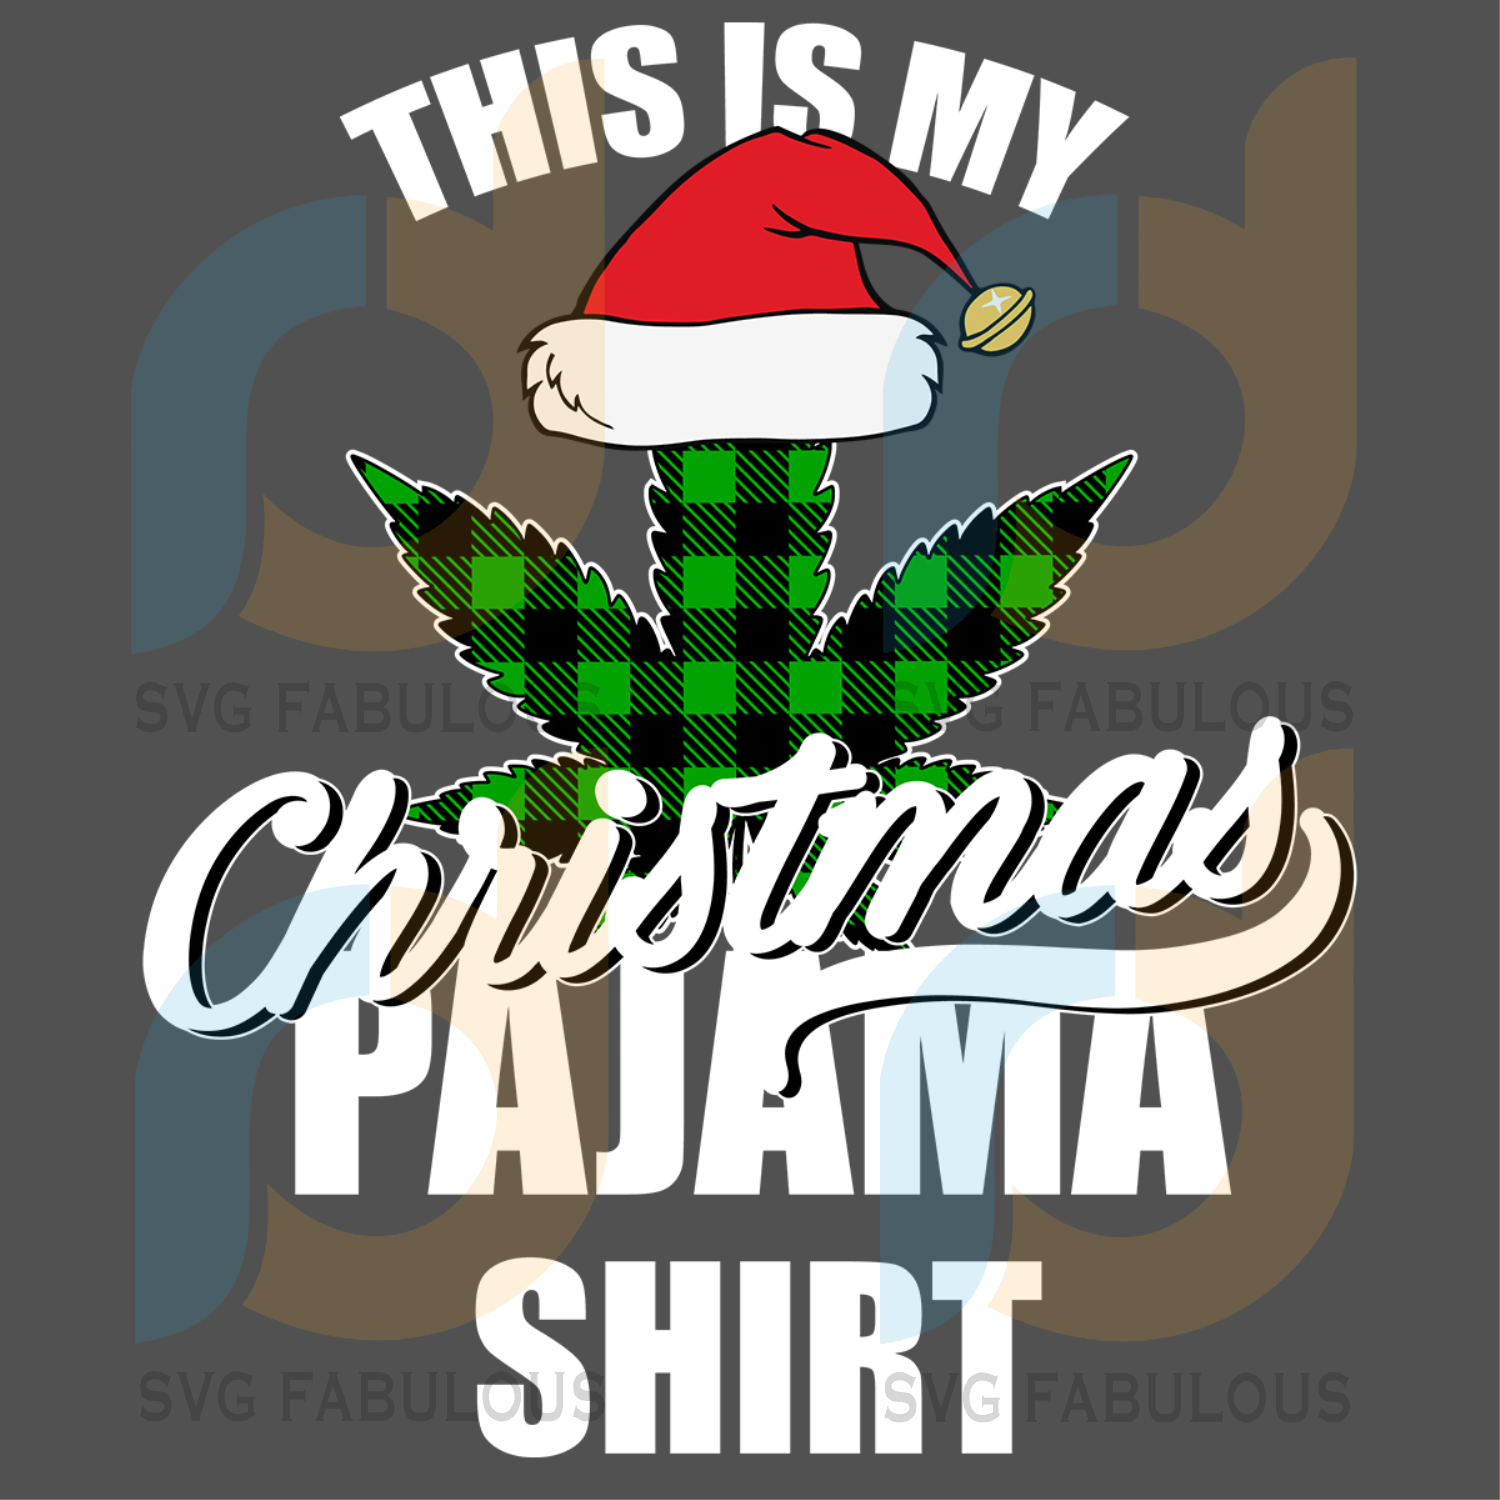 Download This Is My Christmas Pajama Shirt Svg Christmas Svg Christmas Pajama Svg Fabulous